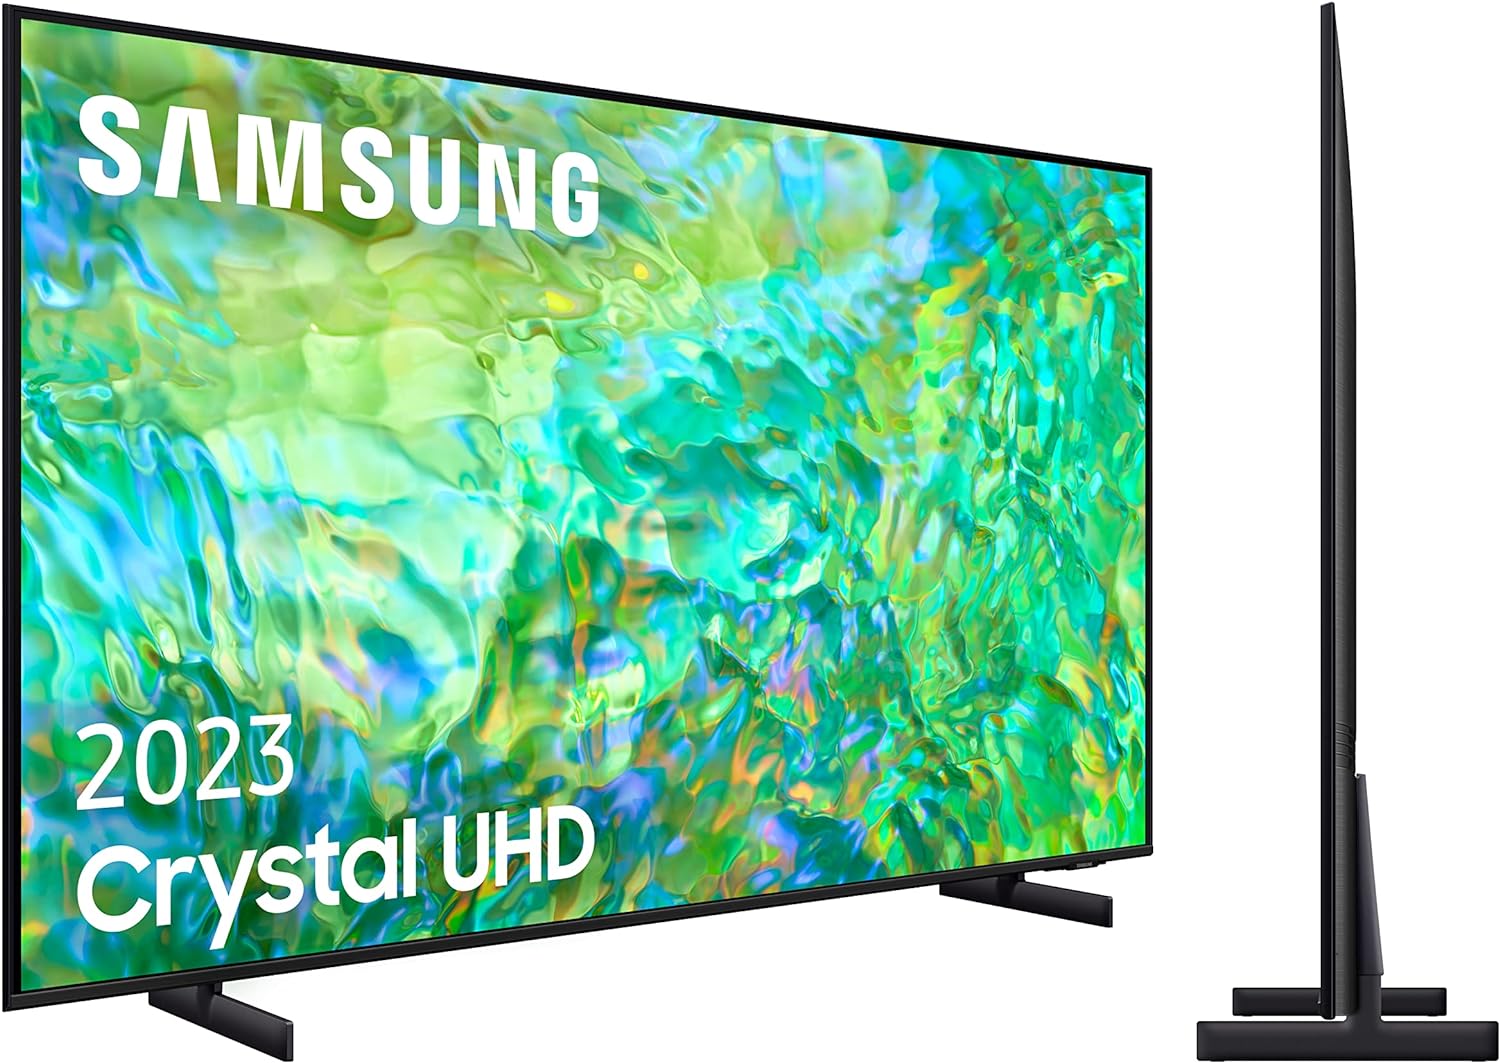 Samsung Crystal UHD vs QLED